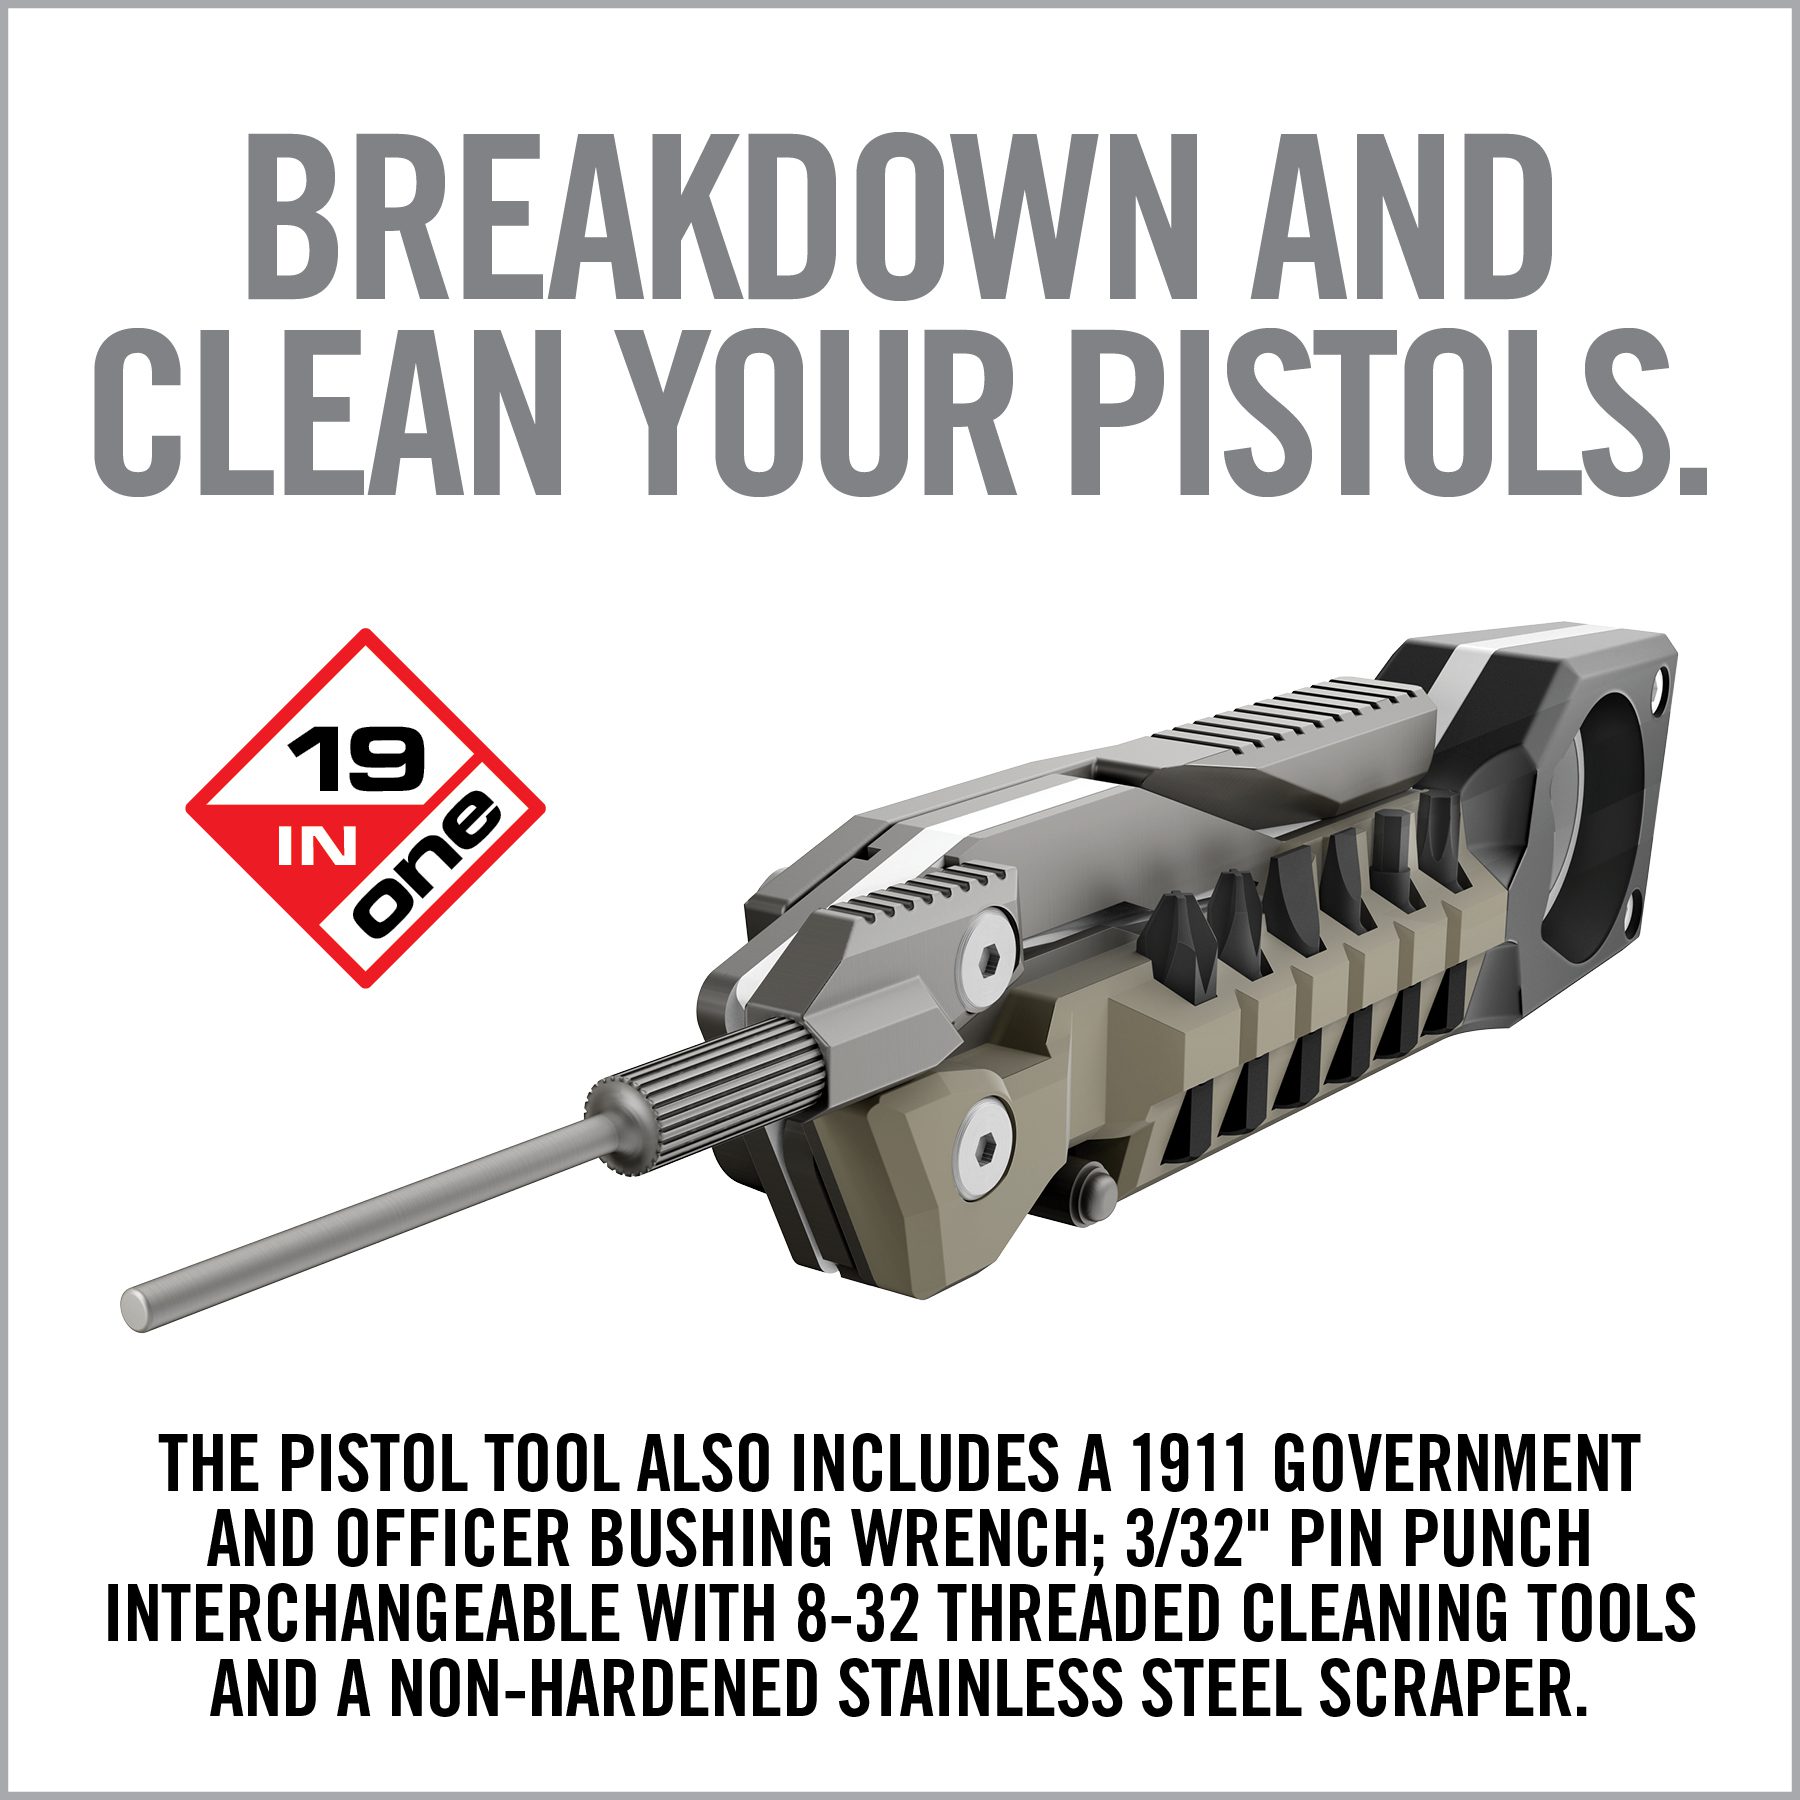 an advertisement for a gun cleaning machine